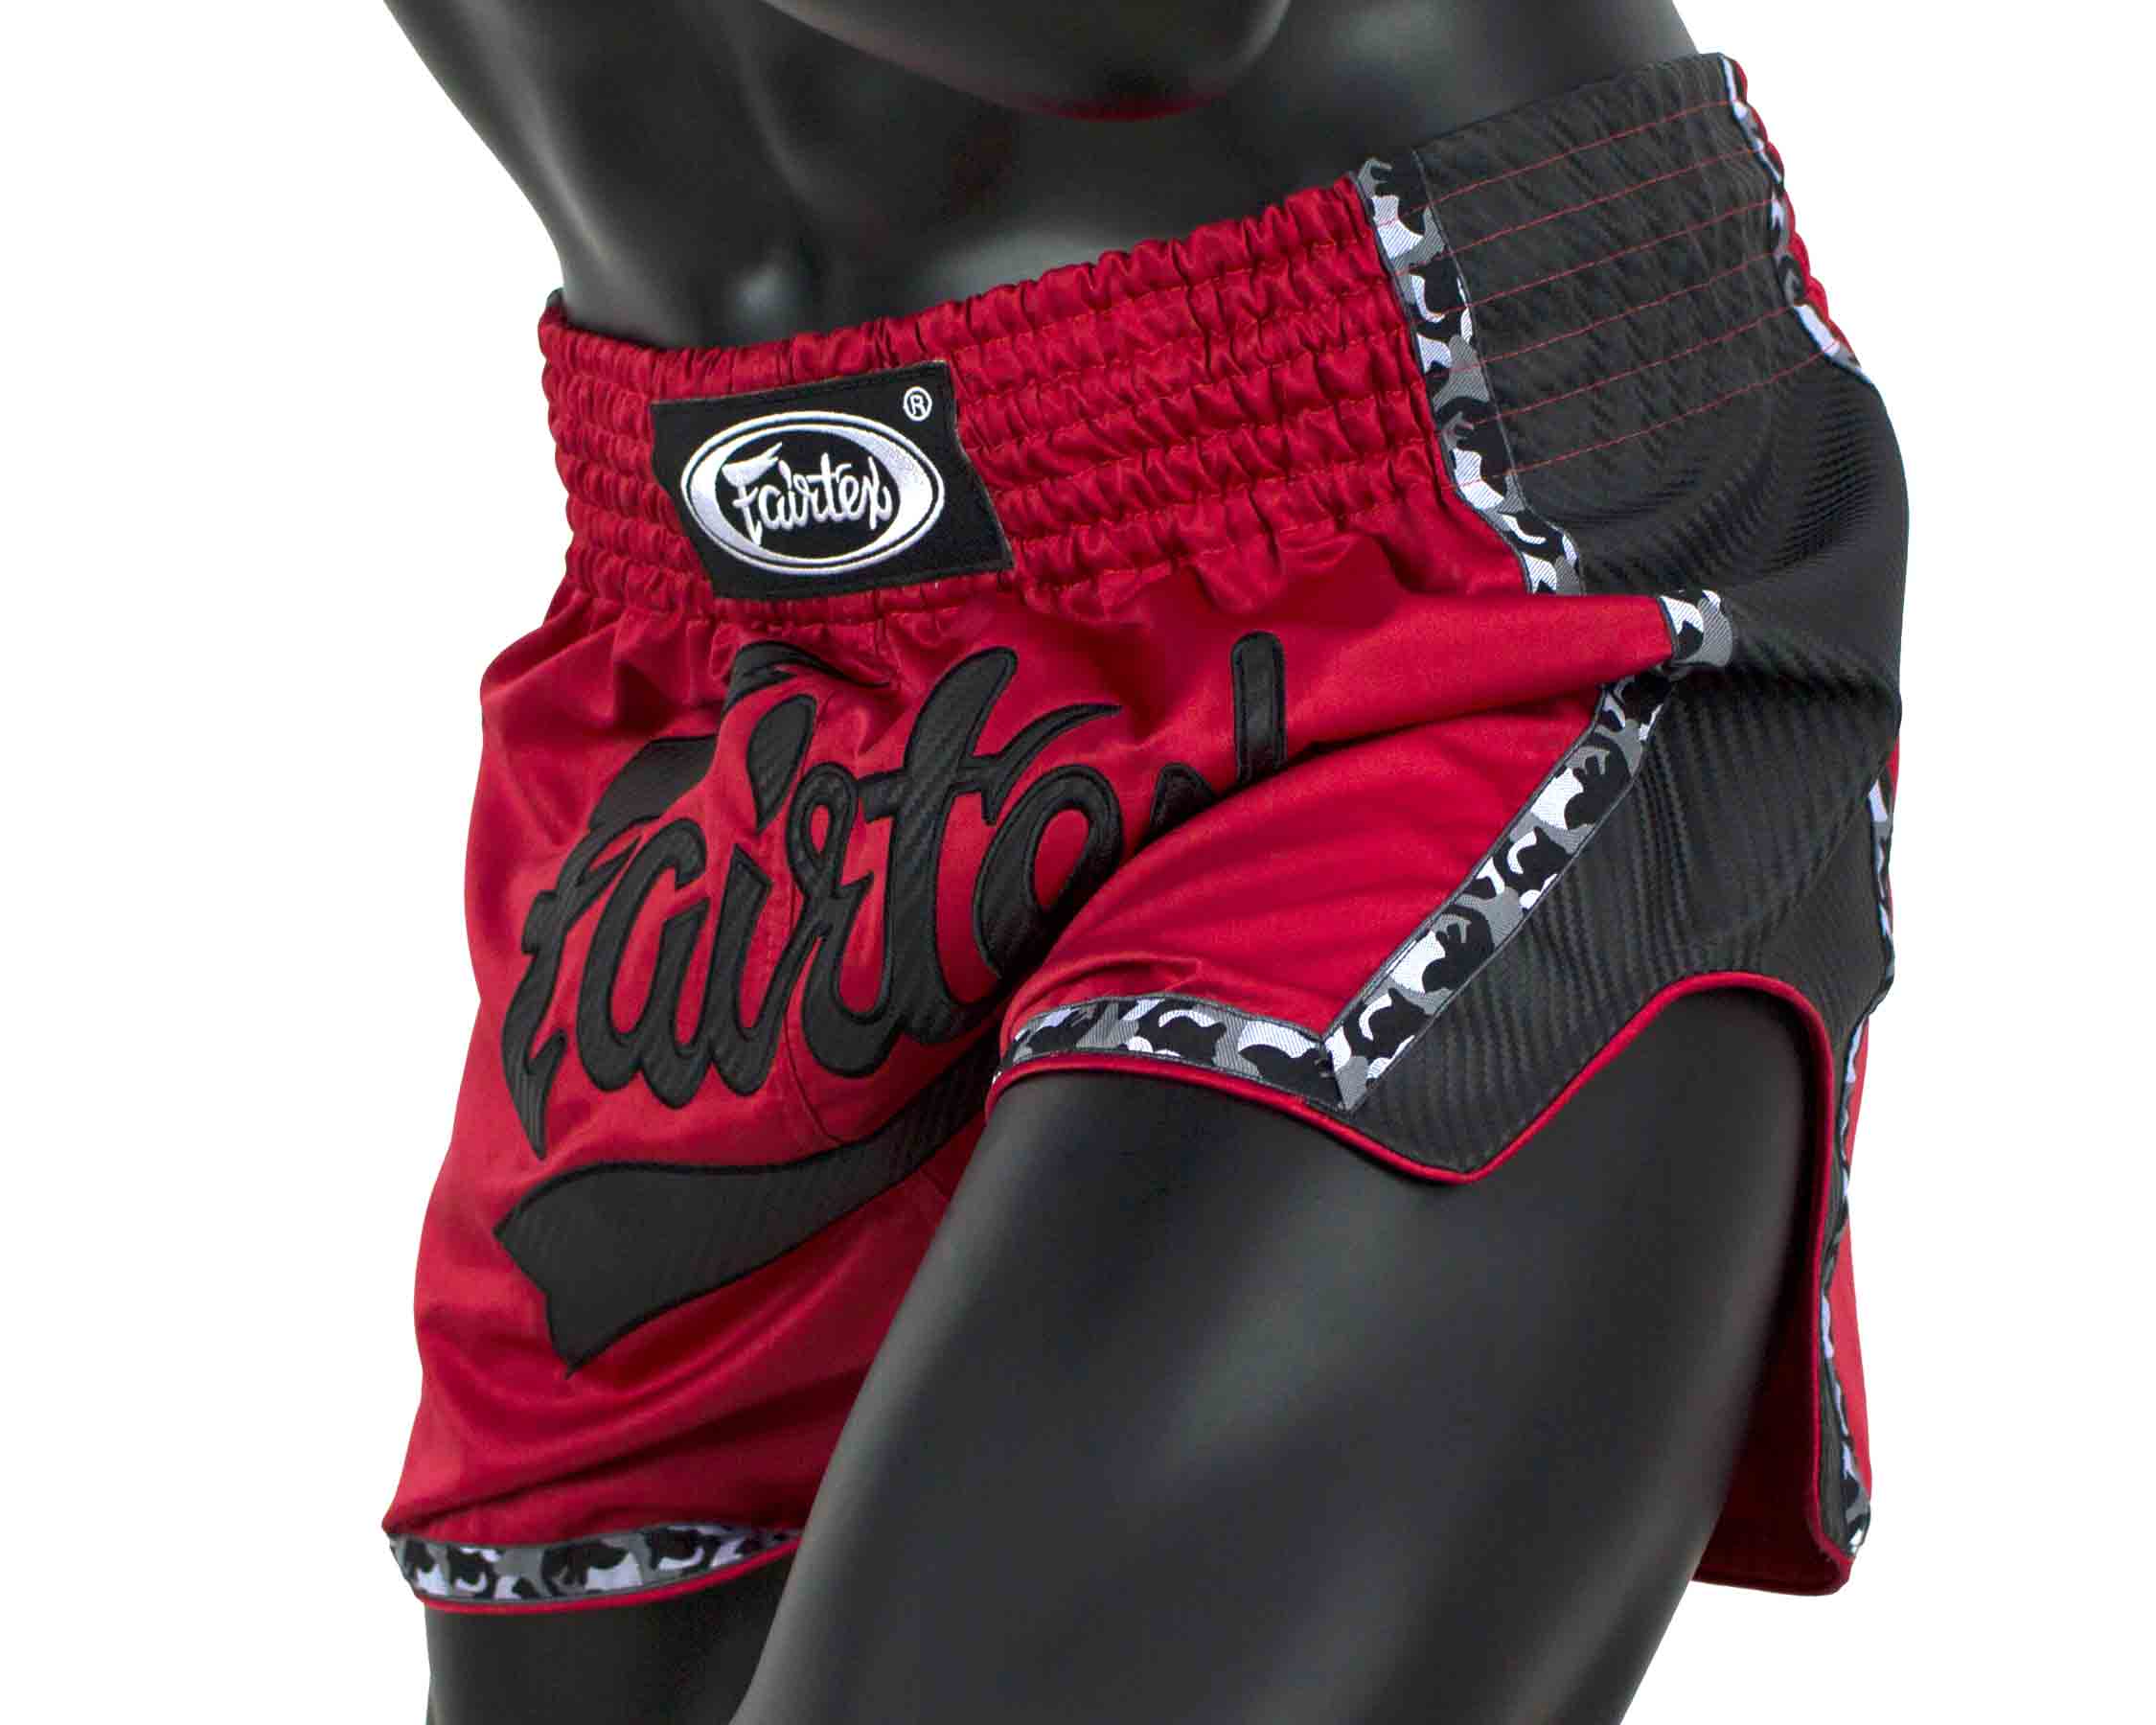 Fairtex BS1703 Satin Shorts Boxing Muay Thai Red Black Slim Cut Trunks MMA K1 